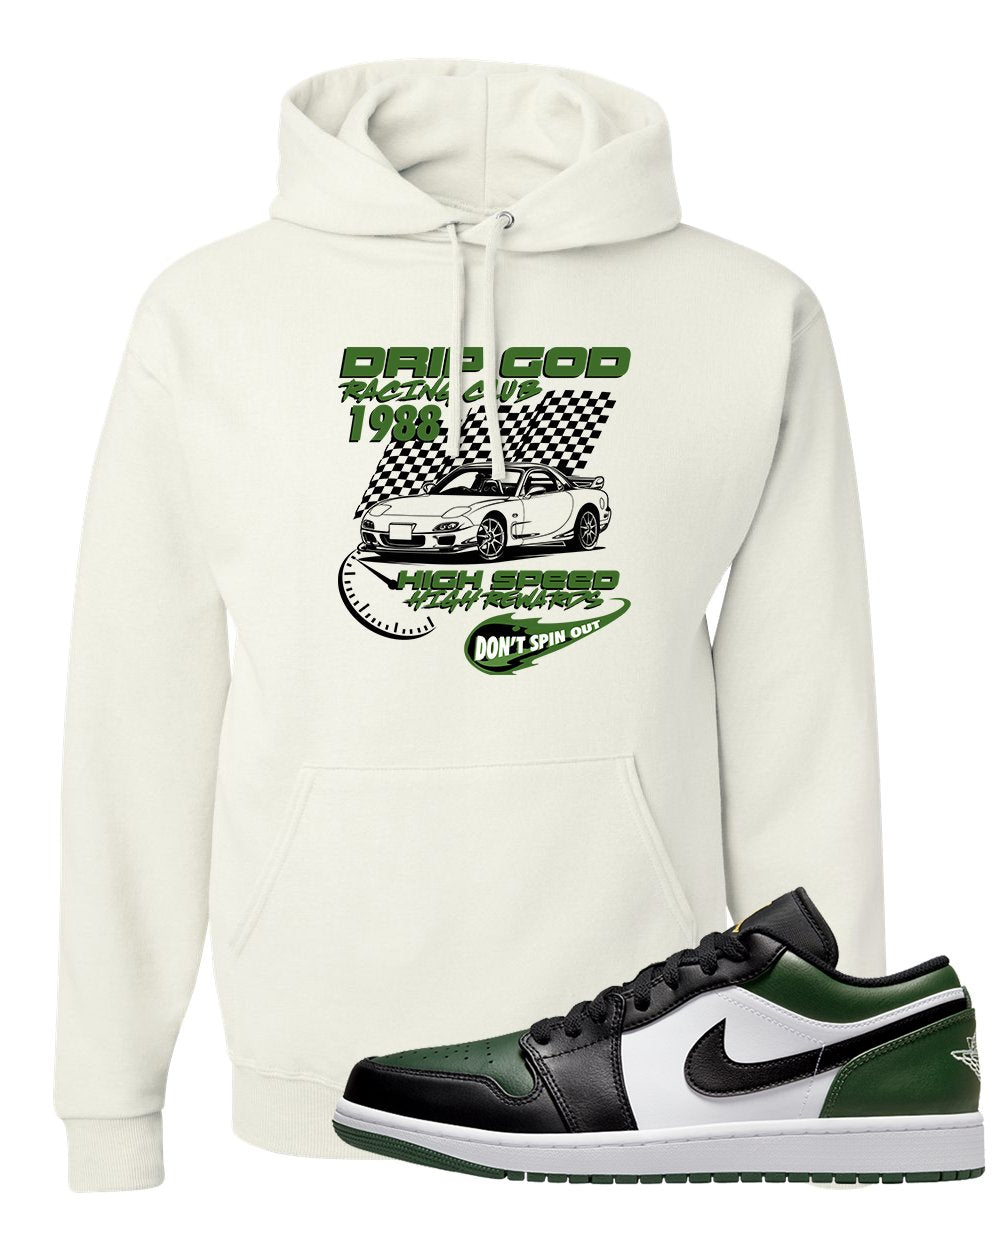 Green Toe Low 1s Hoodie | Drip God Racing Club, White